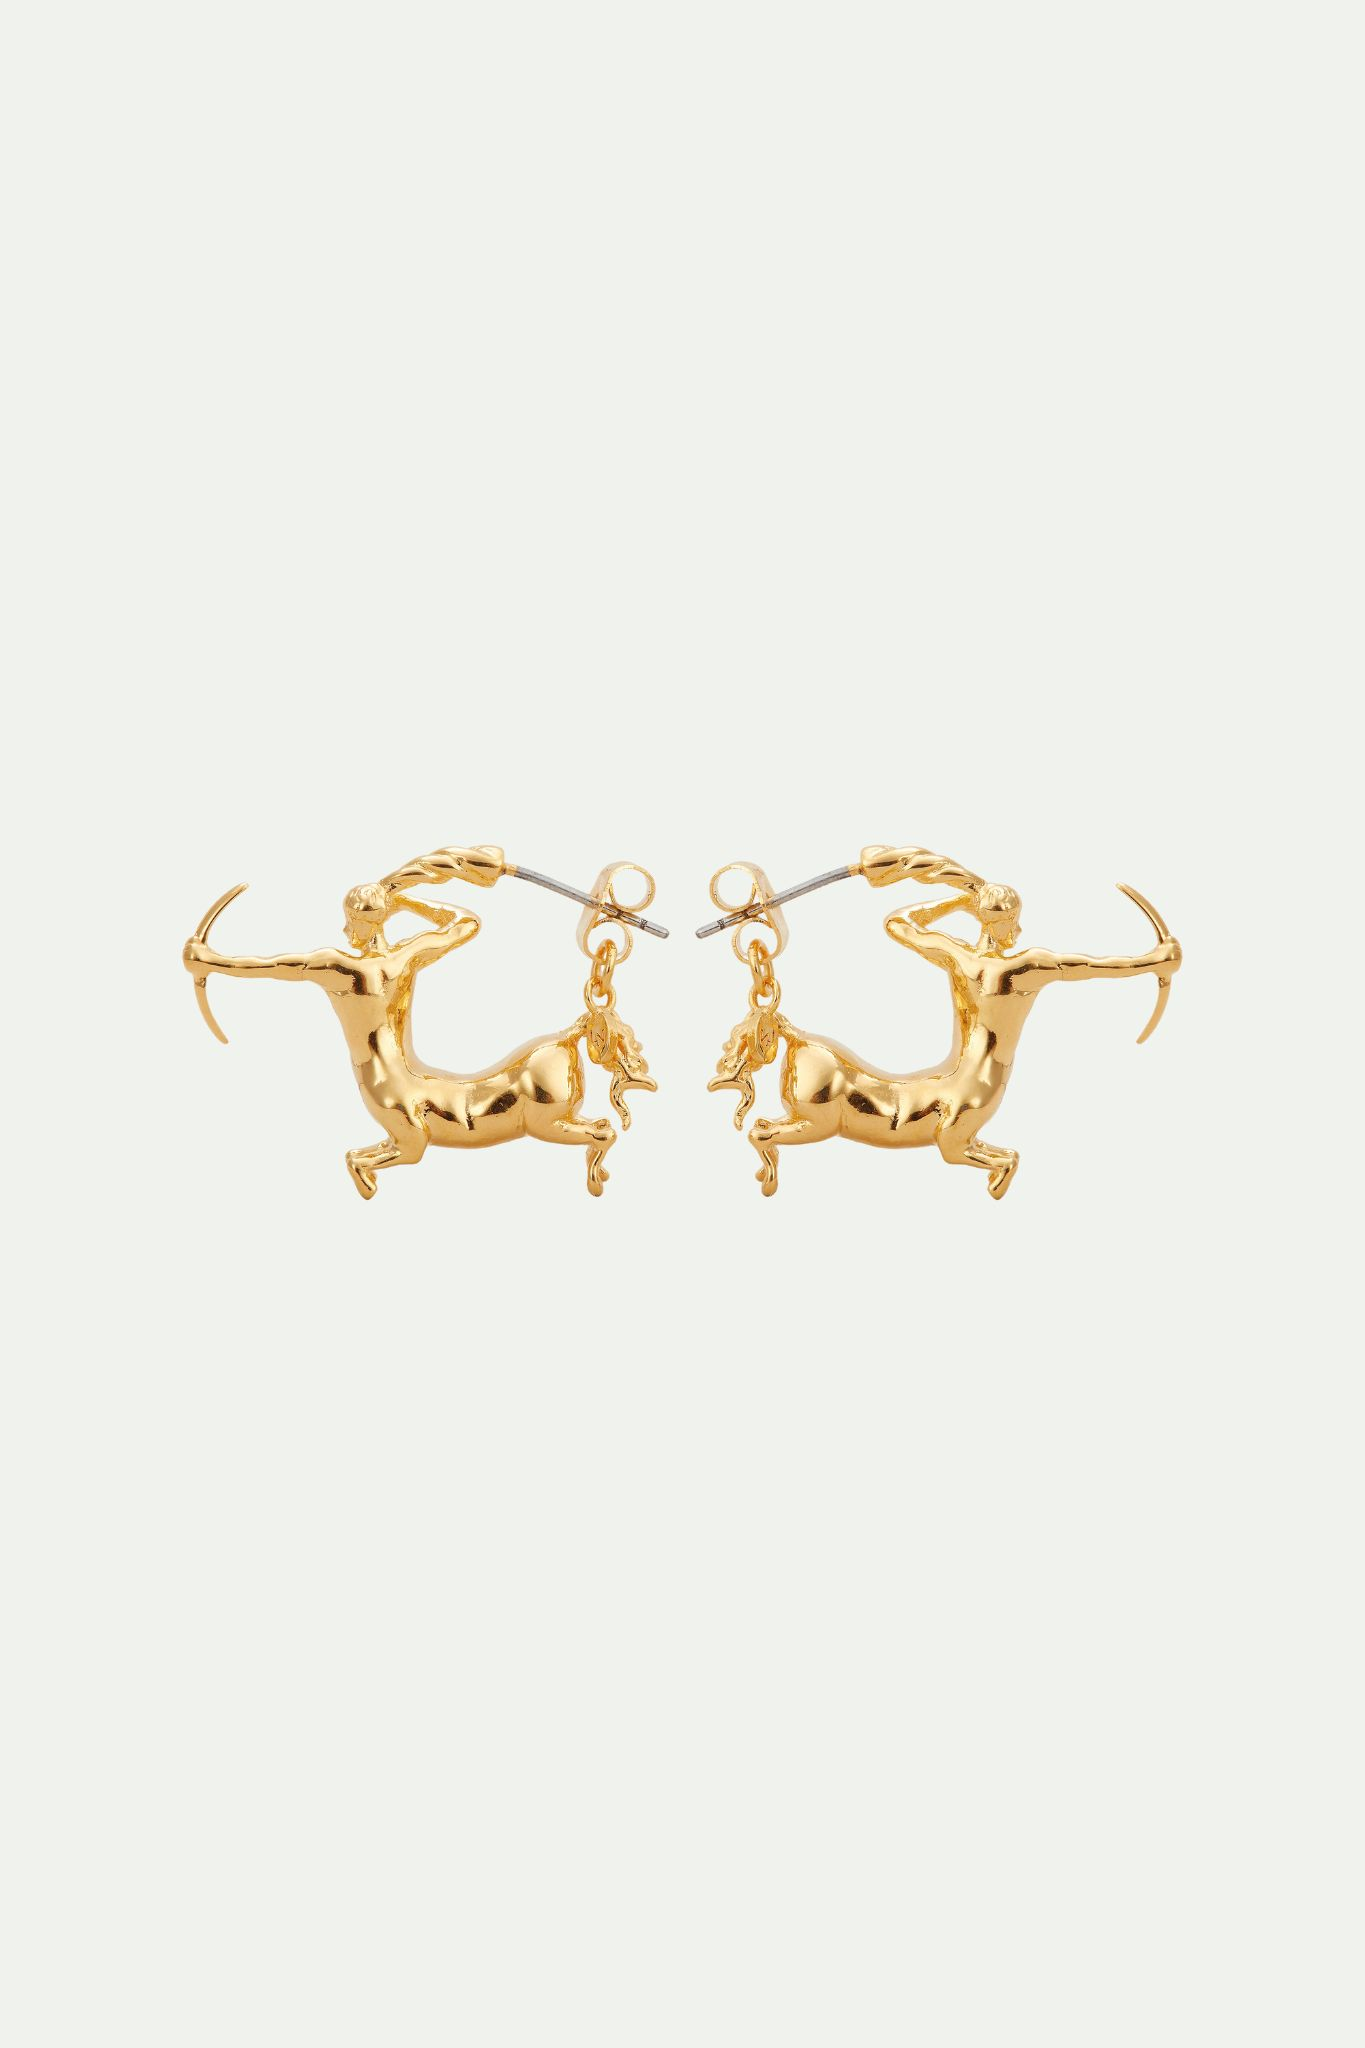 Sagittarius zodiac sign hoops earrings